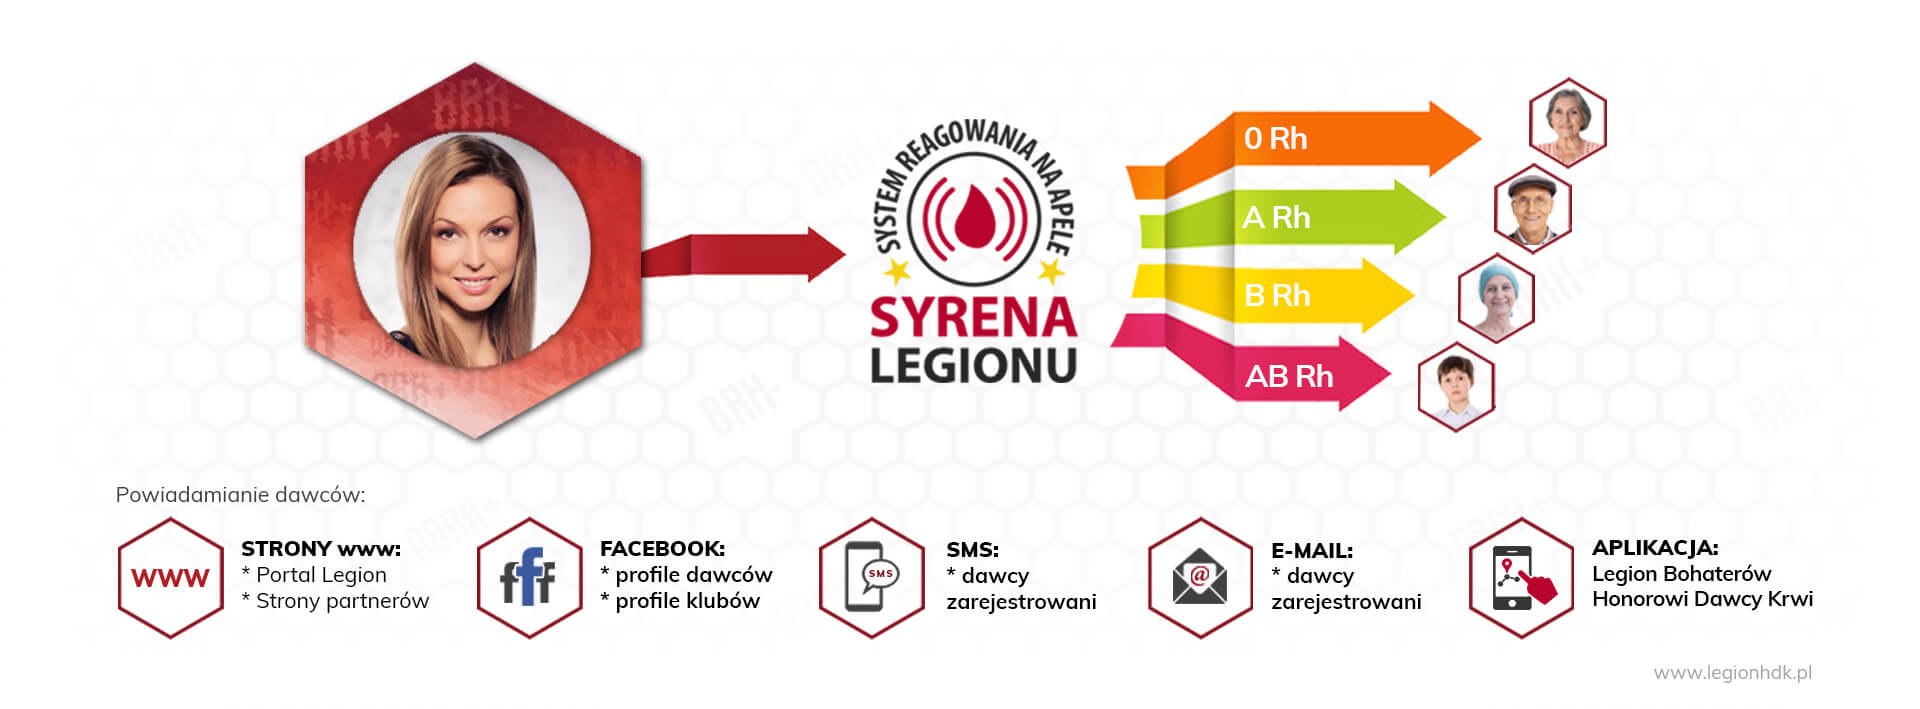 profil pomoc syrena legionu system reagowania na apele o krew legion legionhdk